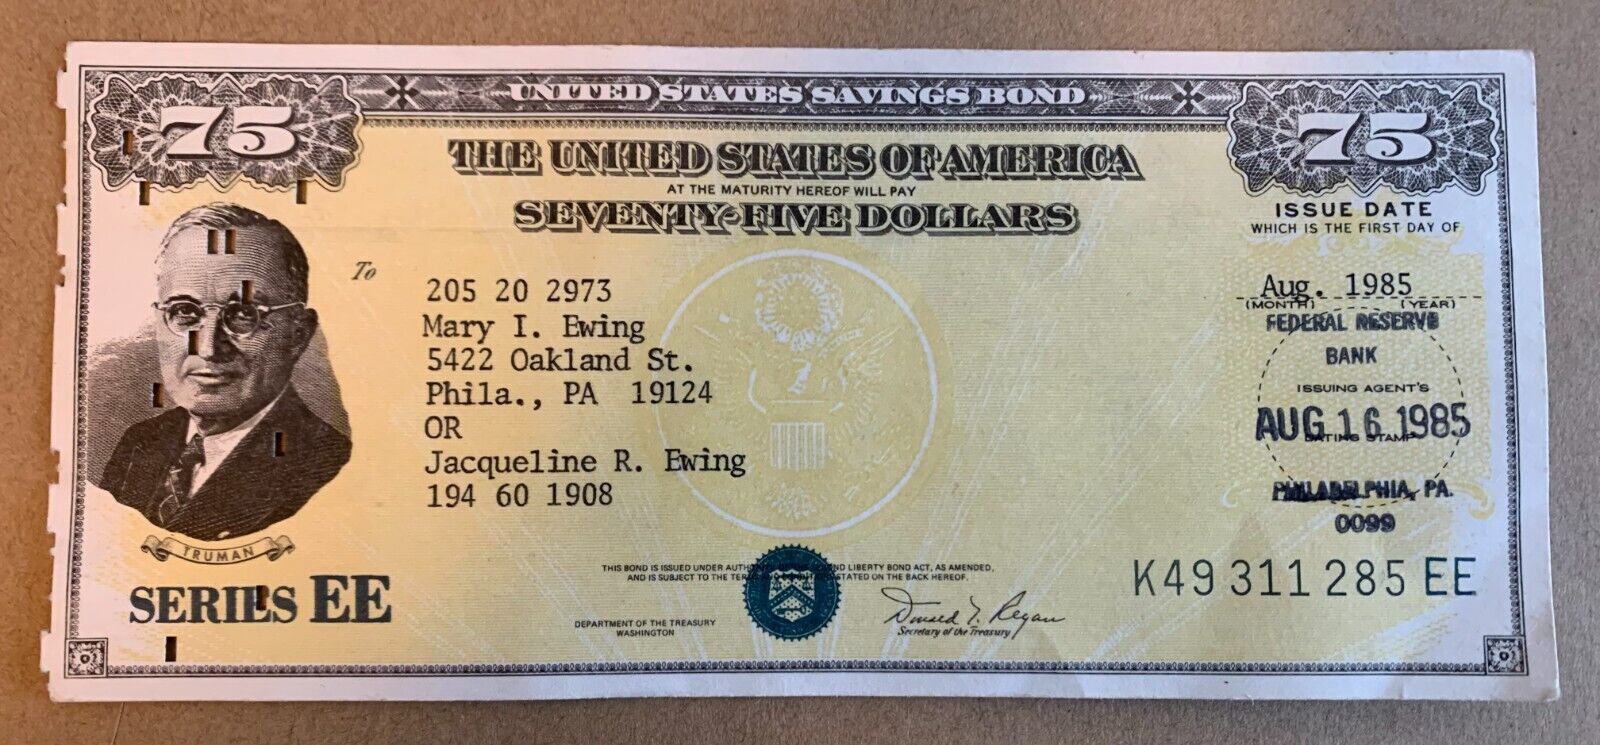 $75 United States Savings Bond (Uncanceled) - U. S. Treasury Bonds 1985 unsigned